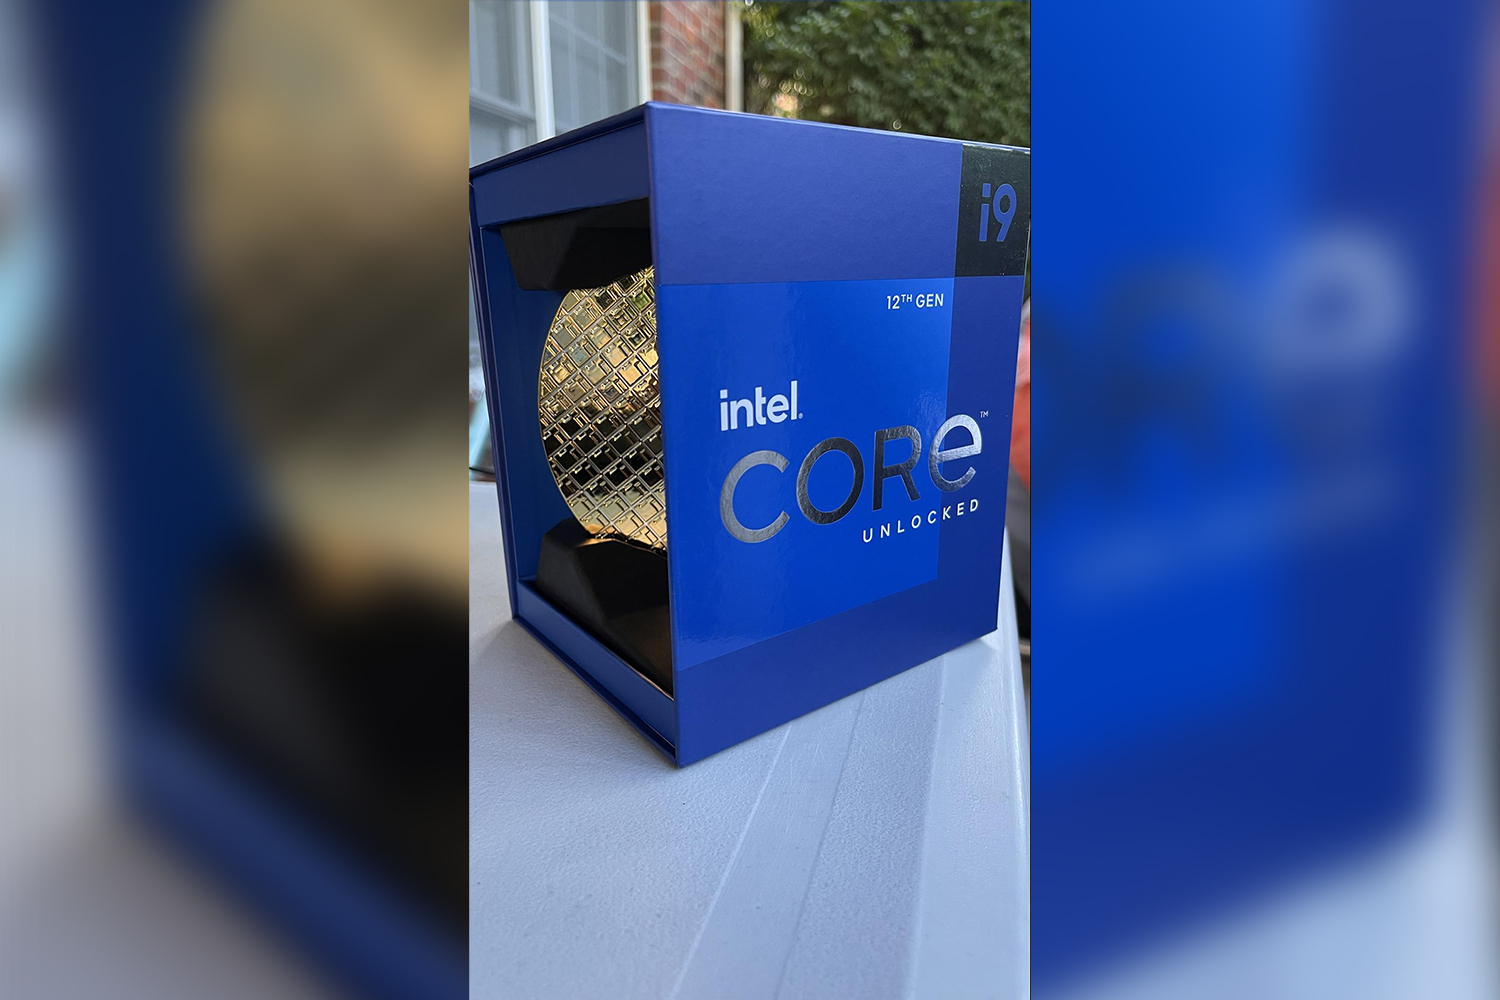 Intel Core i9-12900K box.